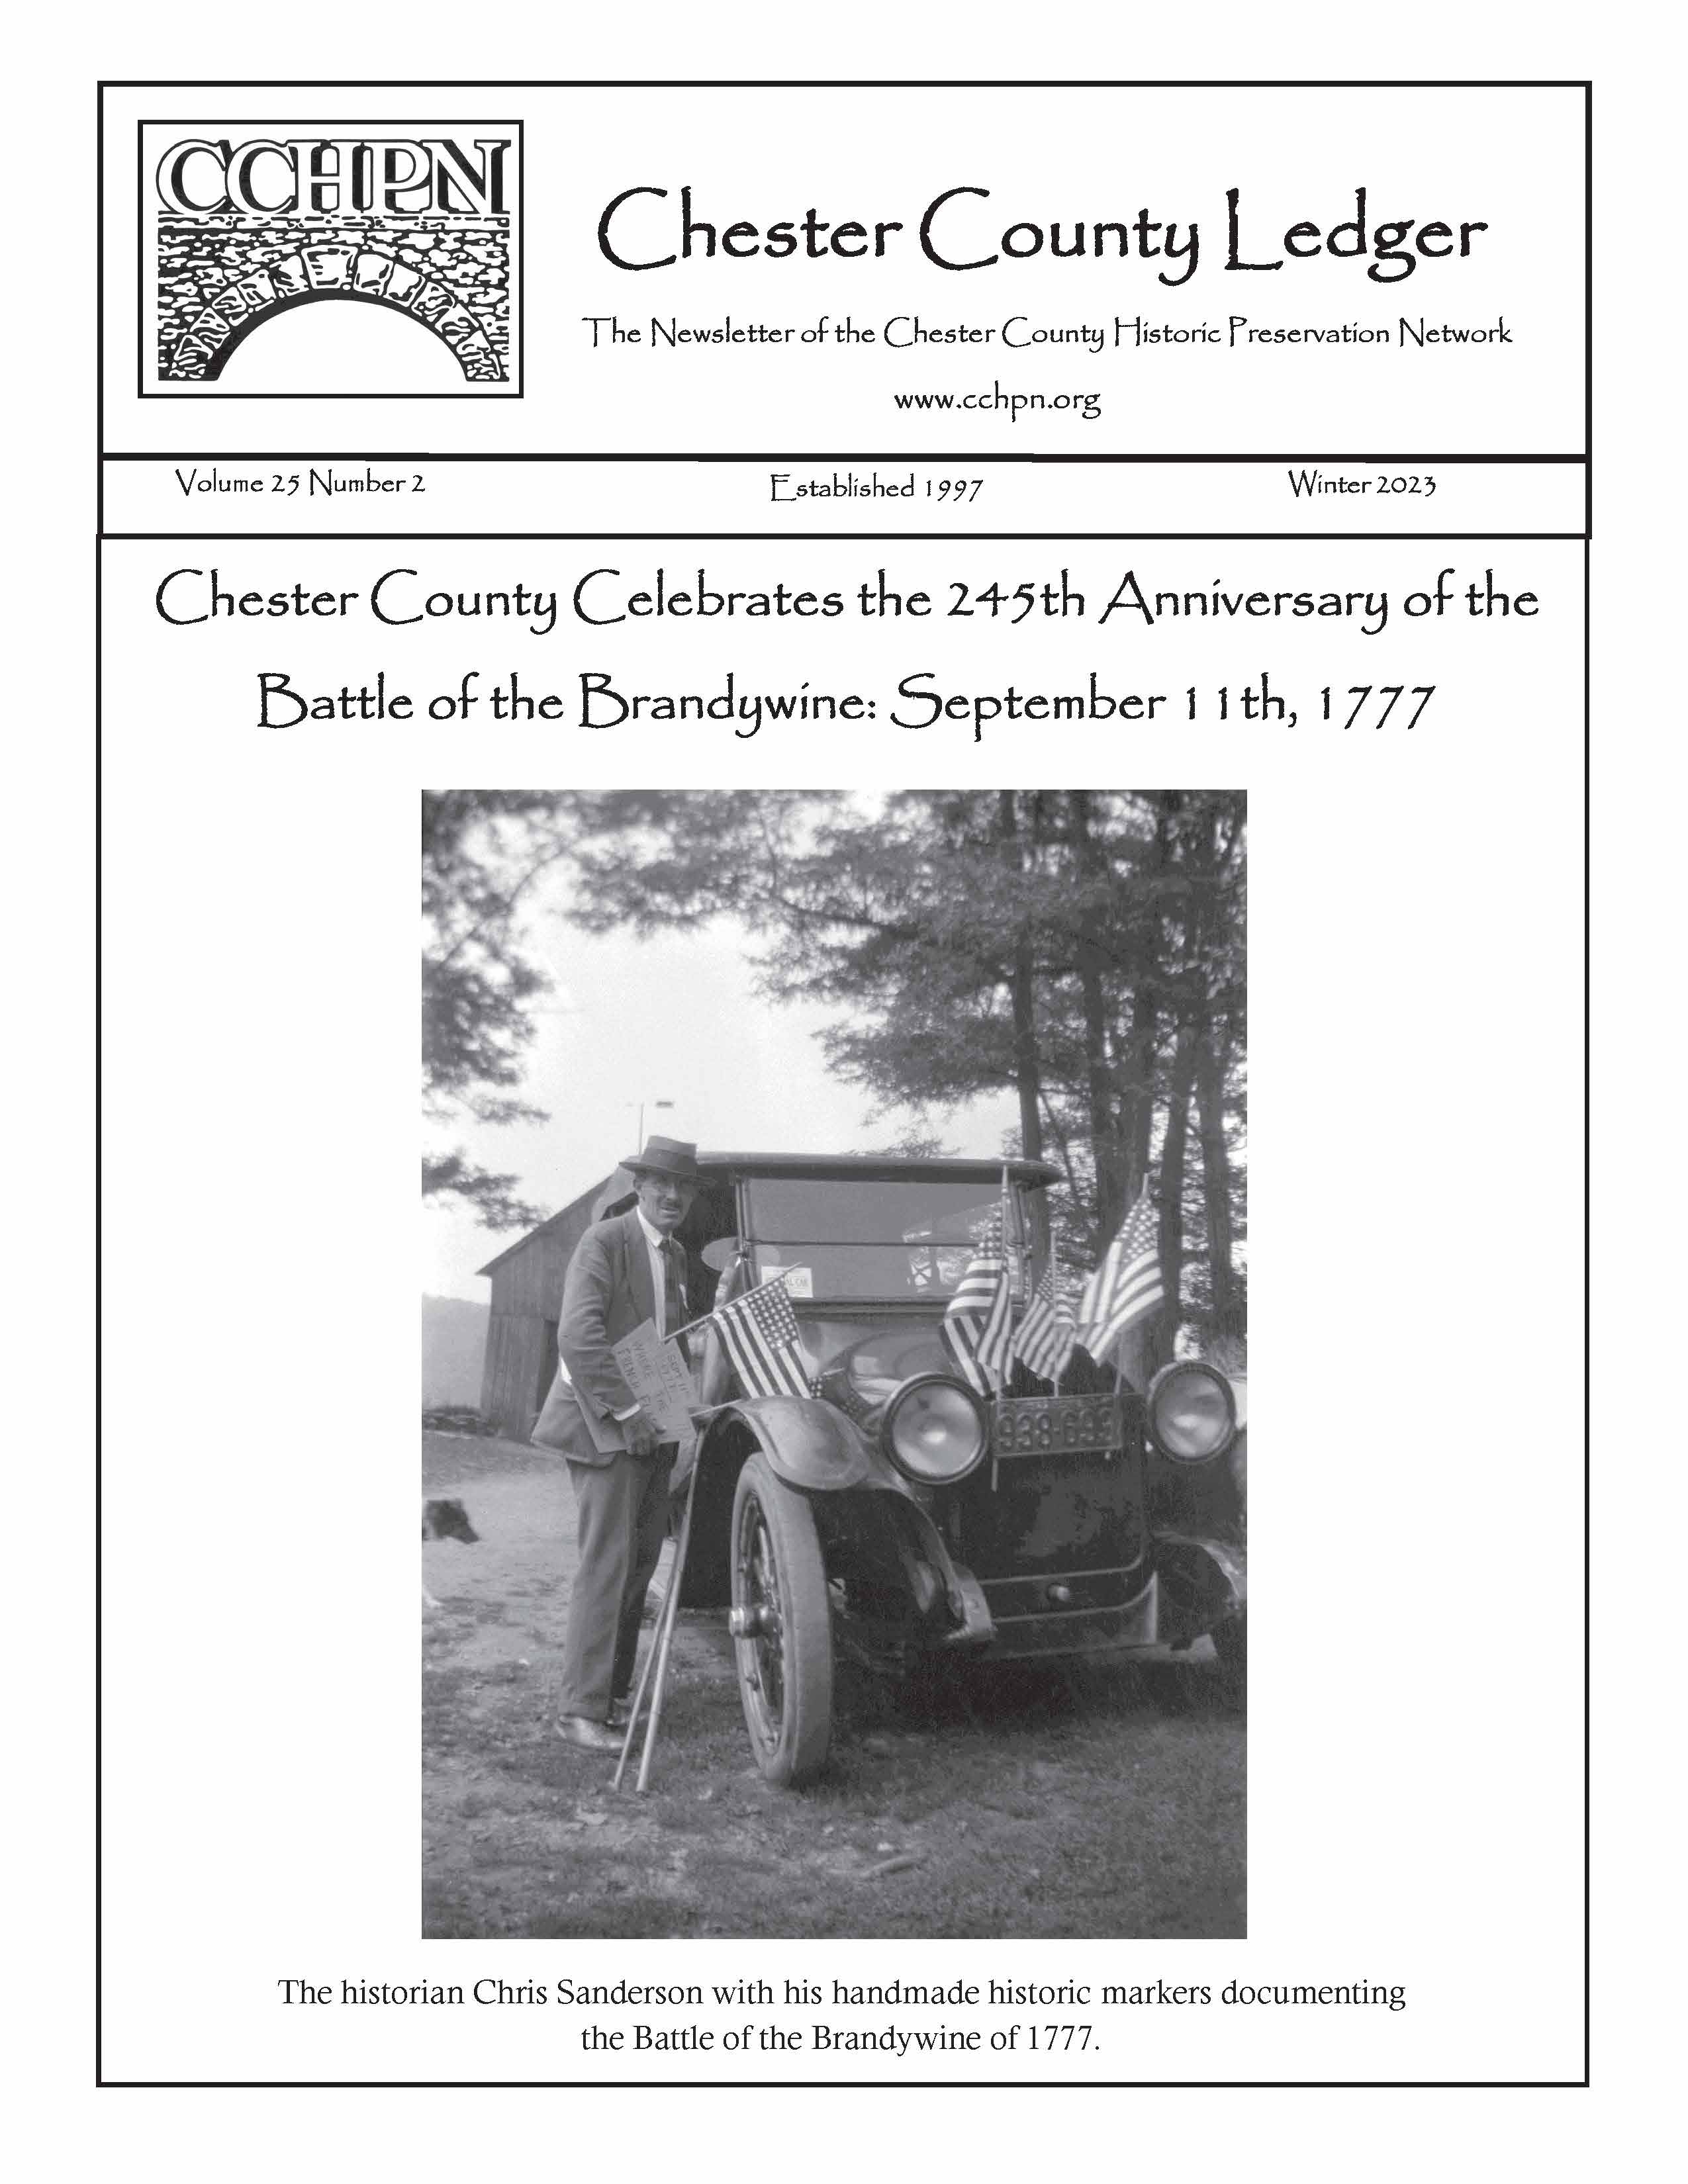 Chester County Ledger Winter 2022: Volume 25, Issue 2 